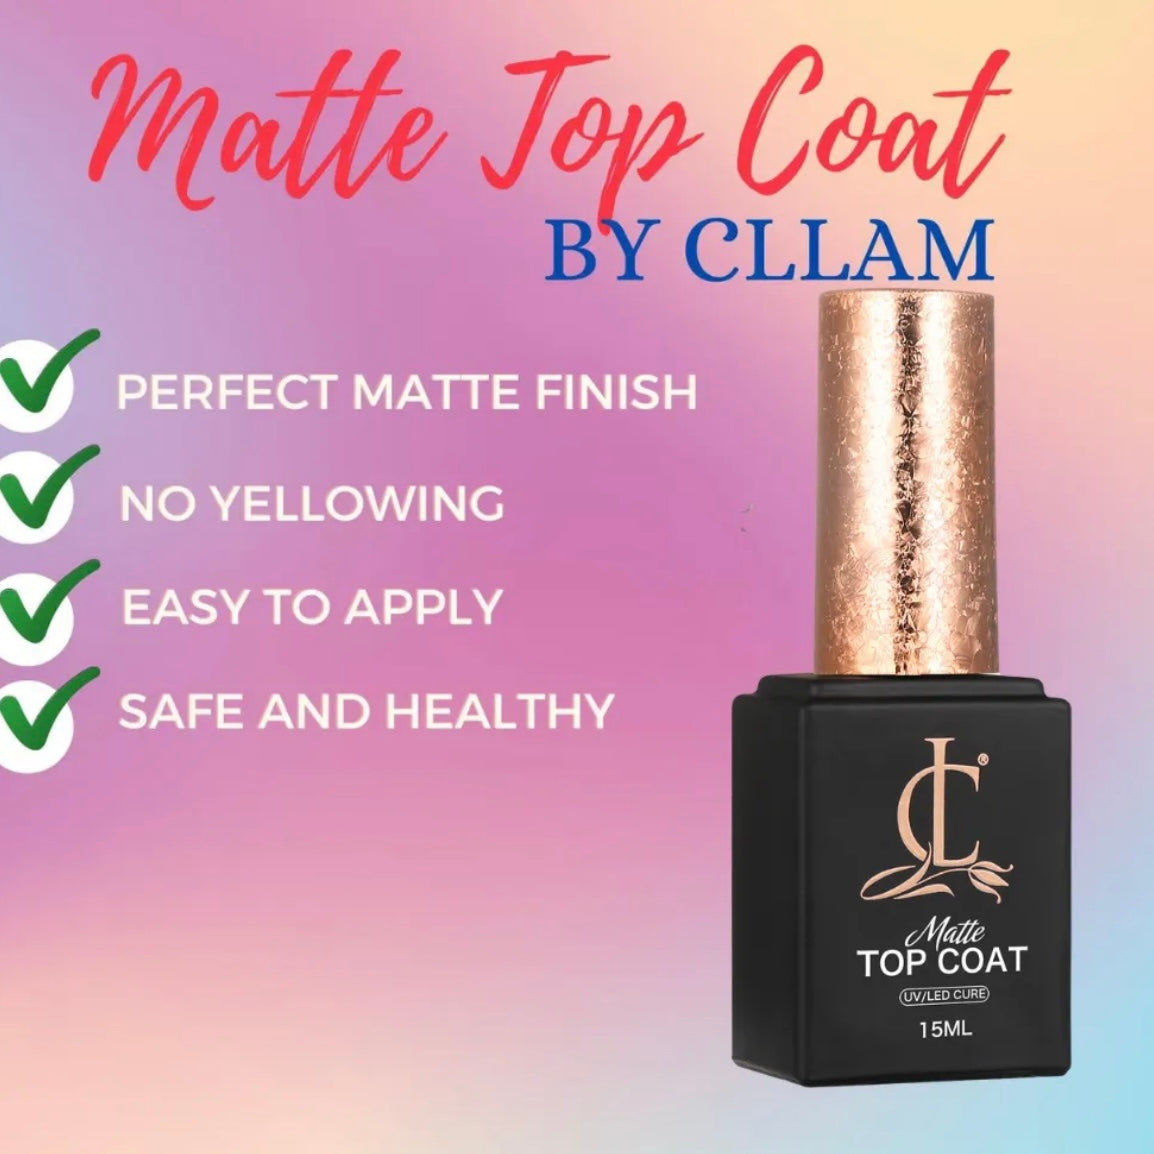 CL CLAM Matte Top Coat